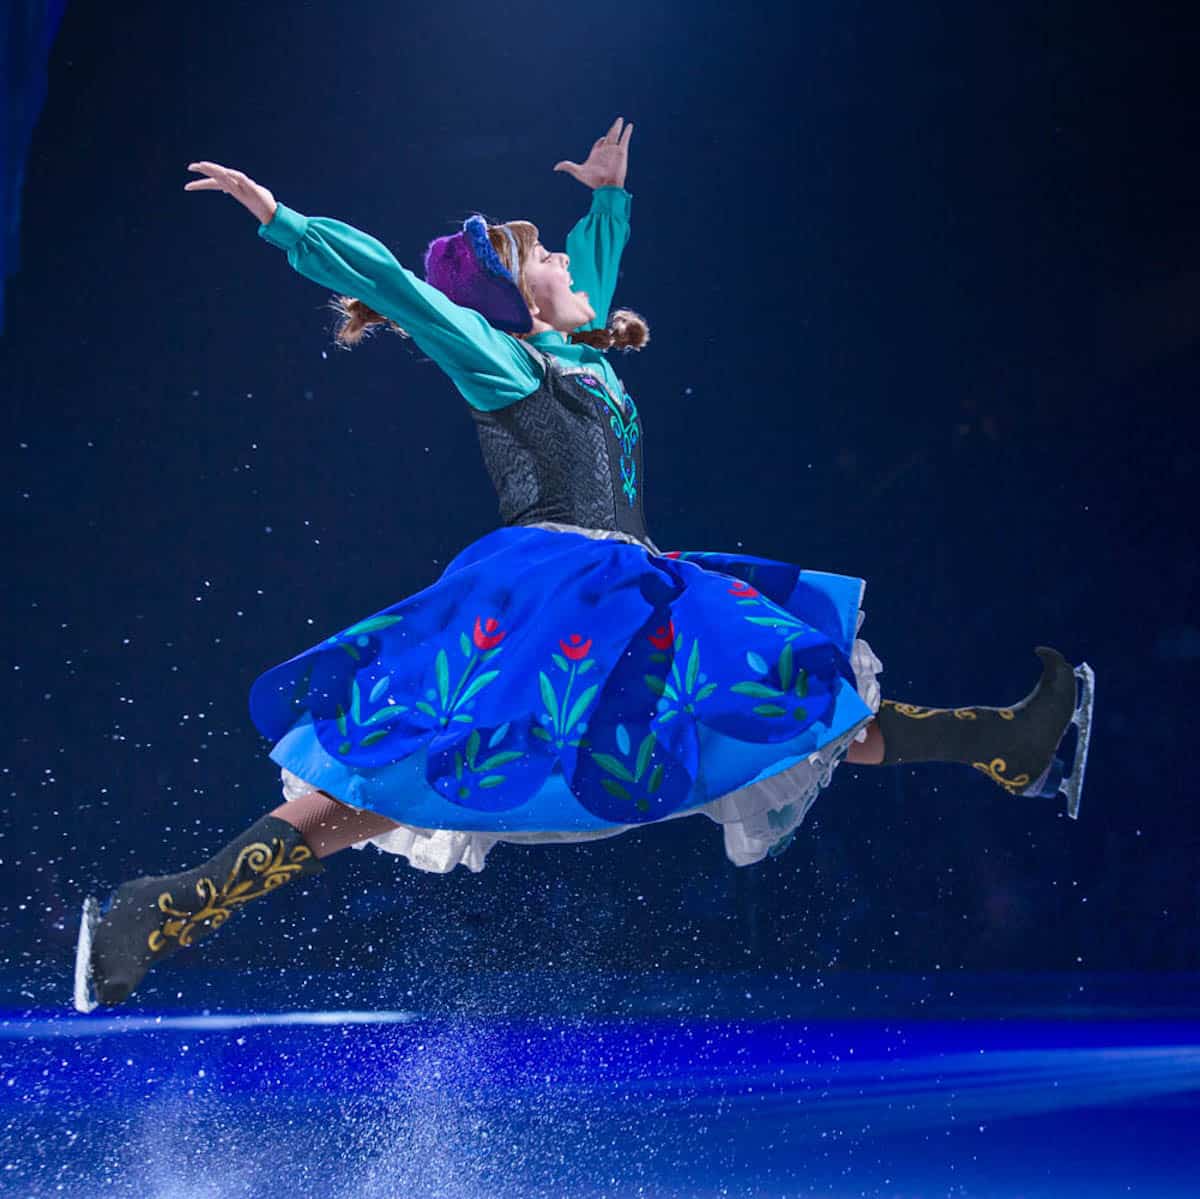 Ana at Disney on Ice